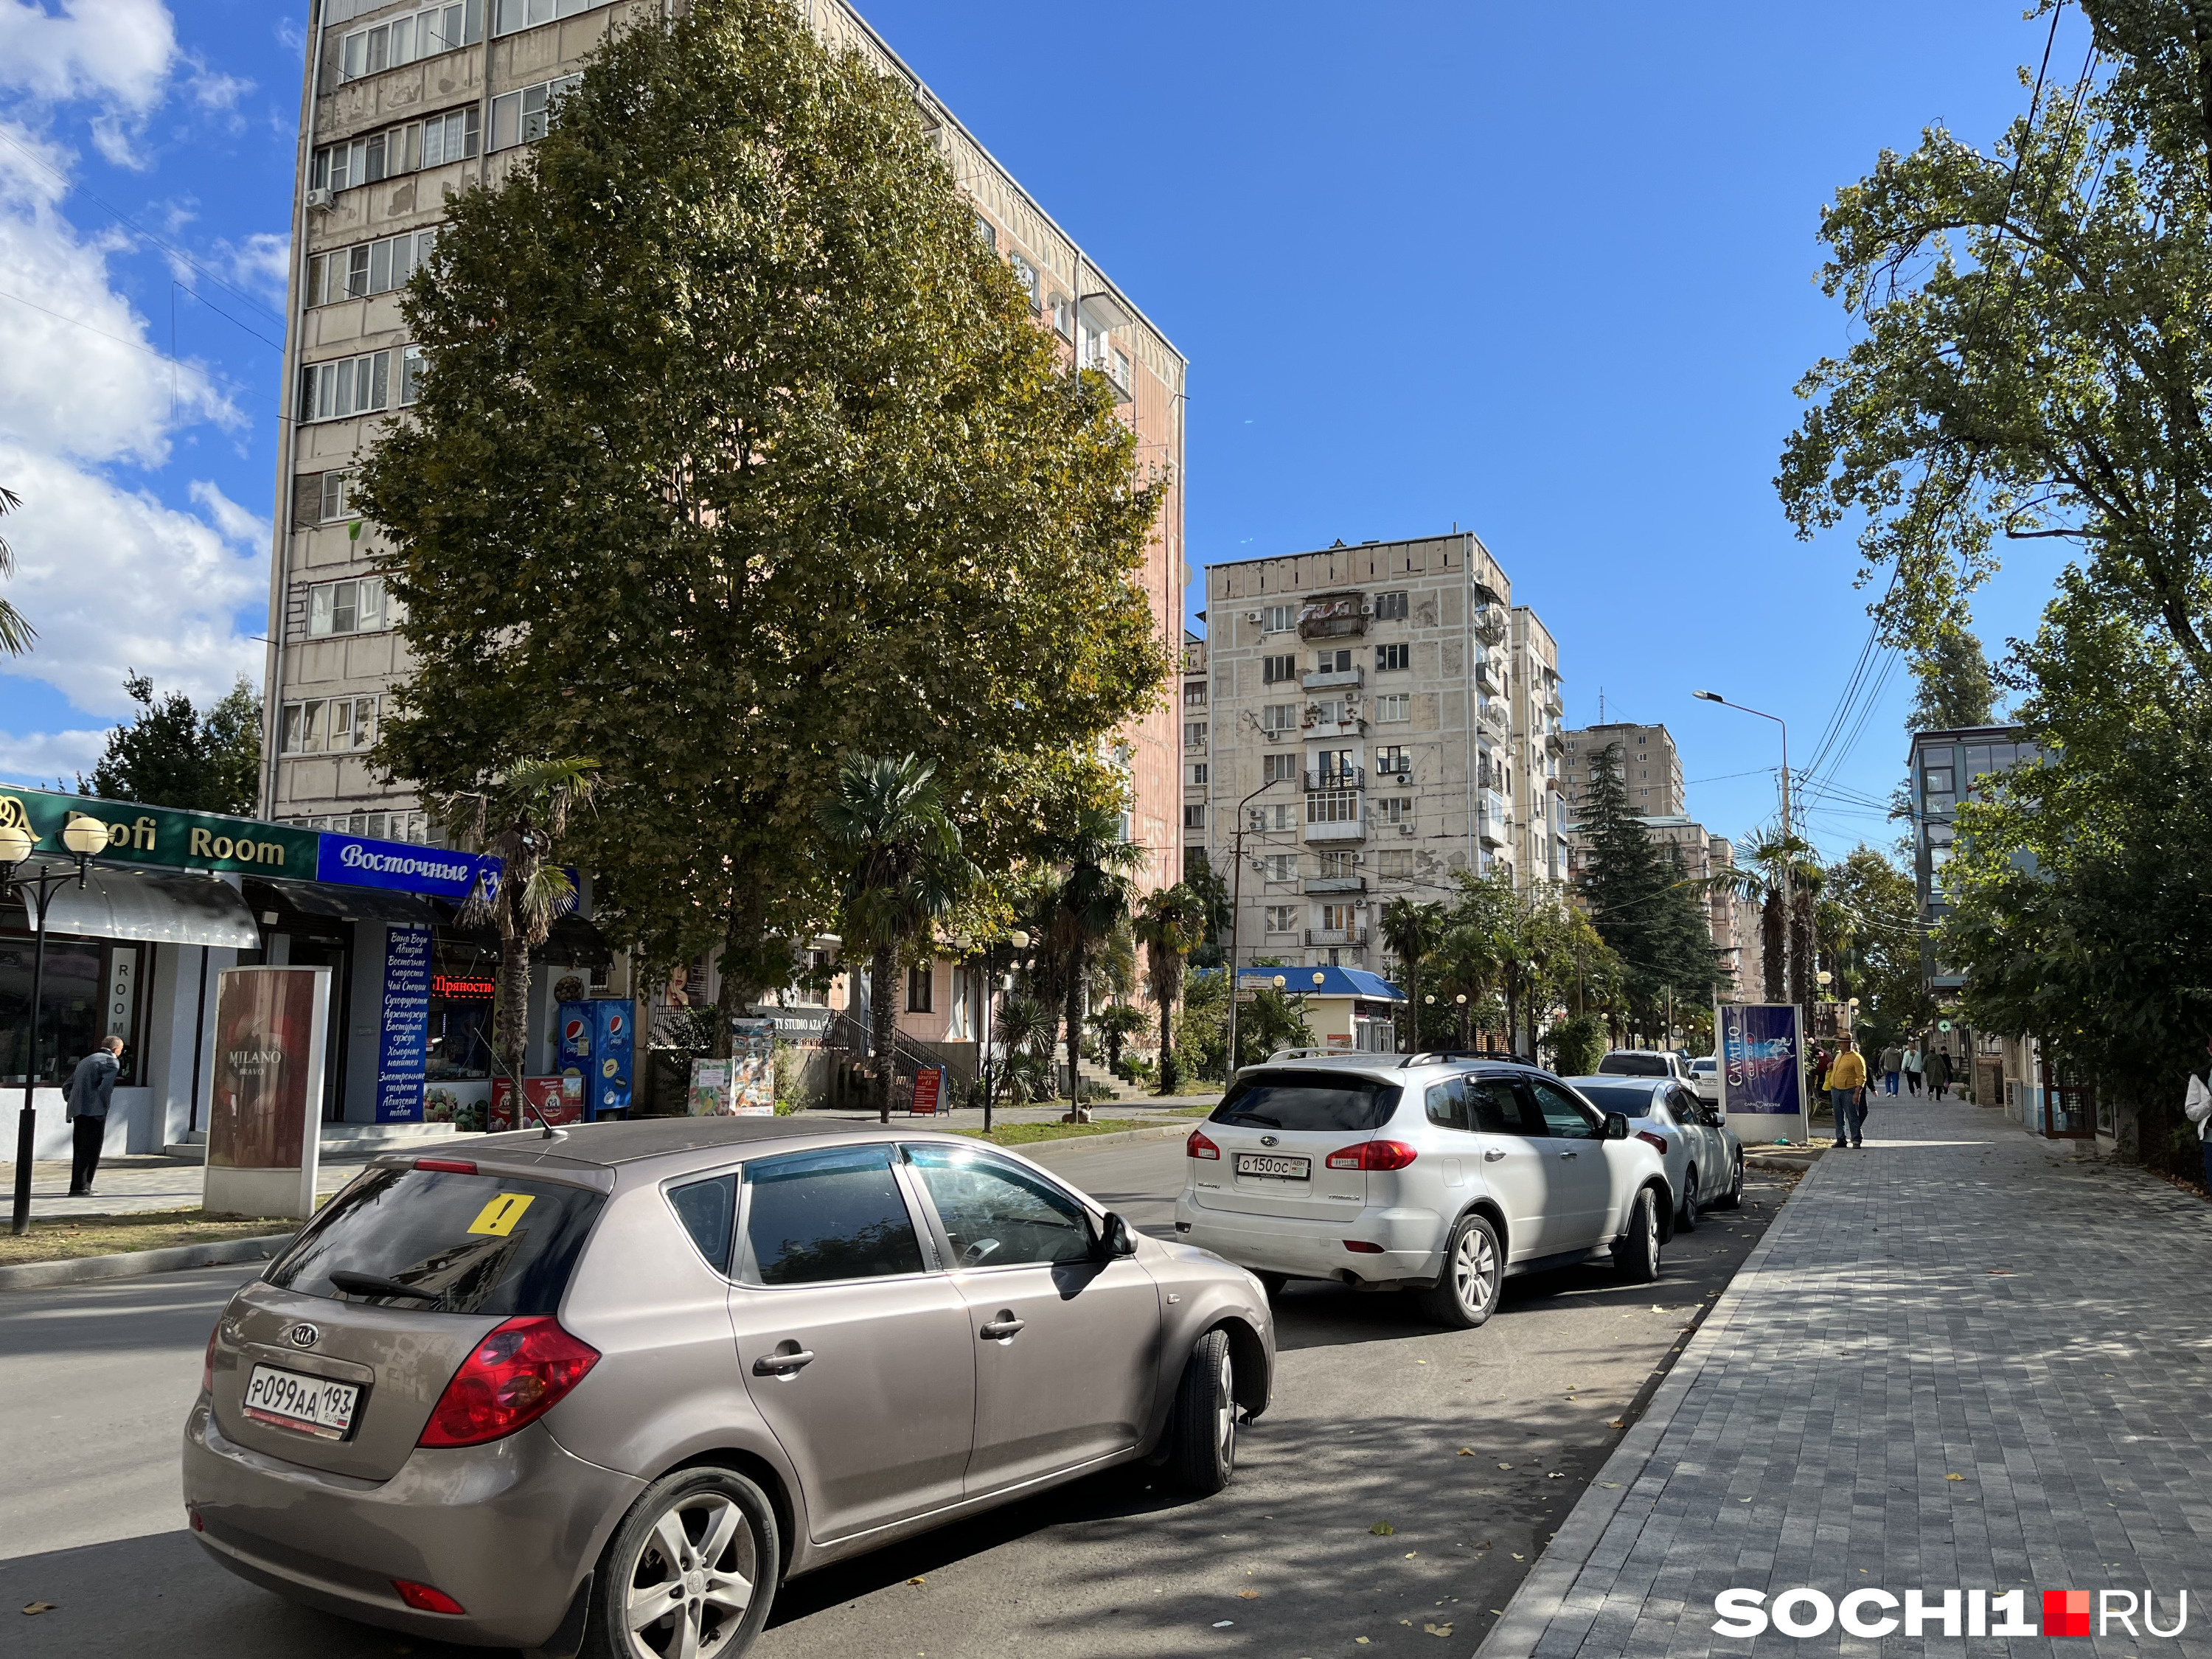 Найти парковку для автомобиля в Абхазии вообще не проблема